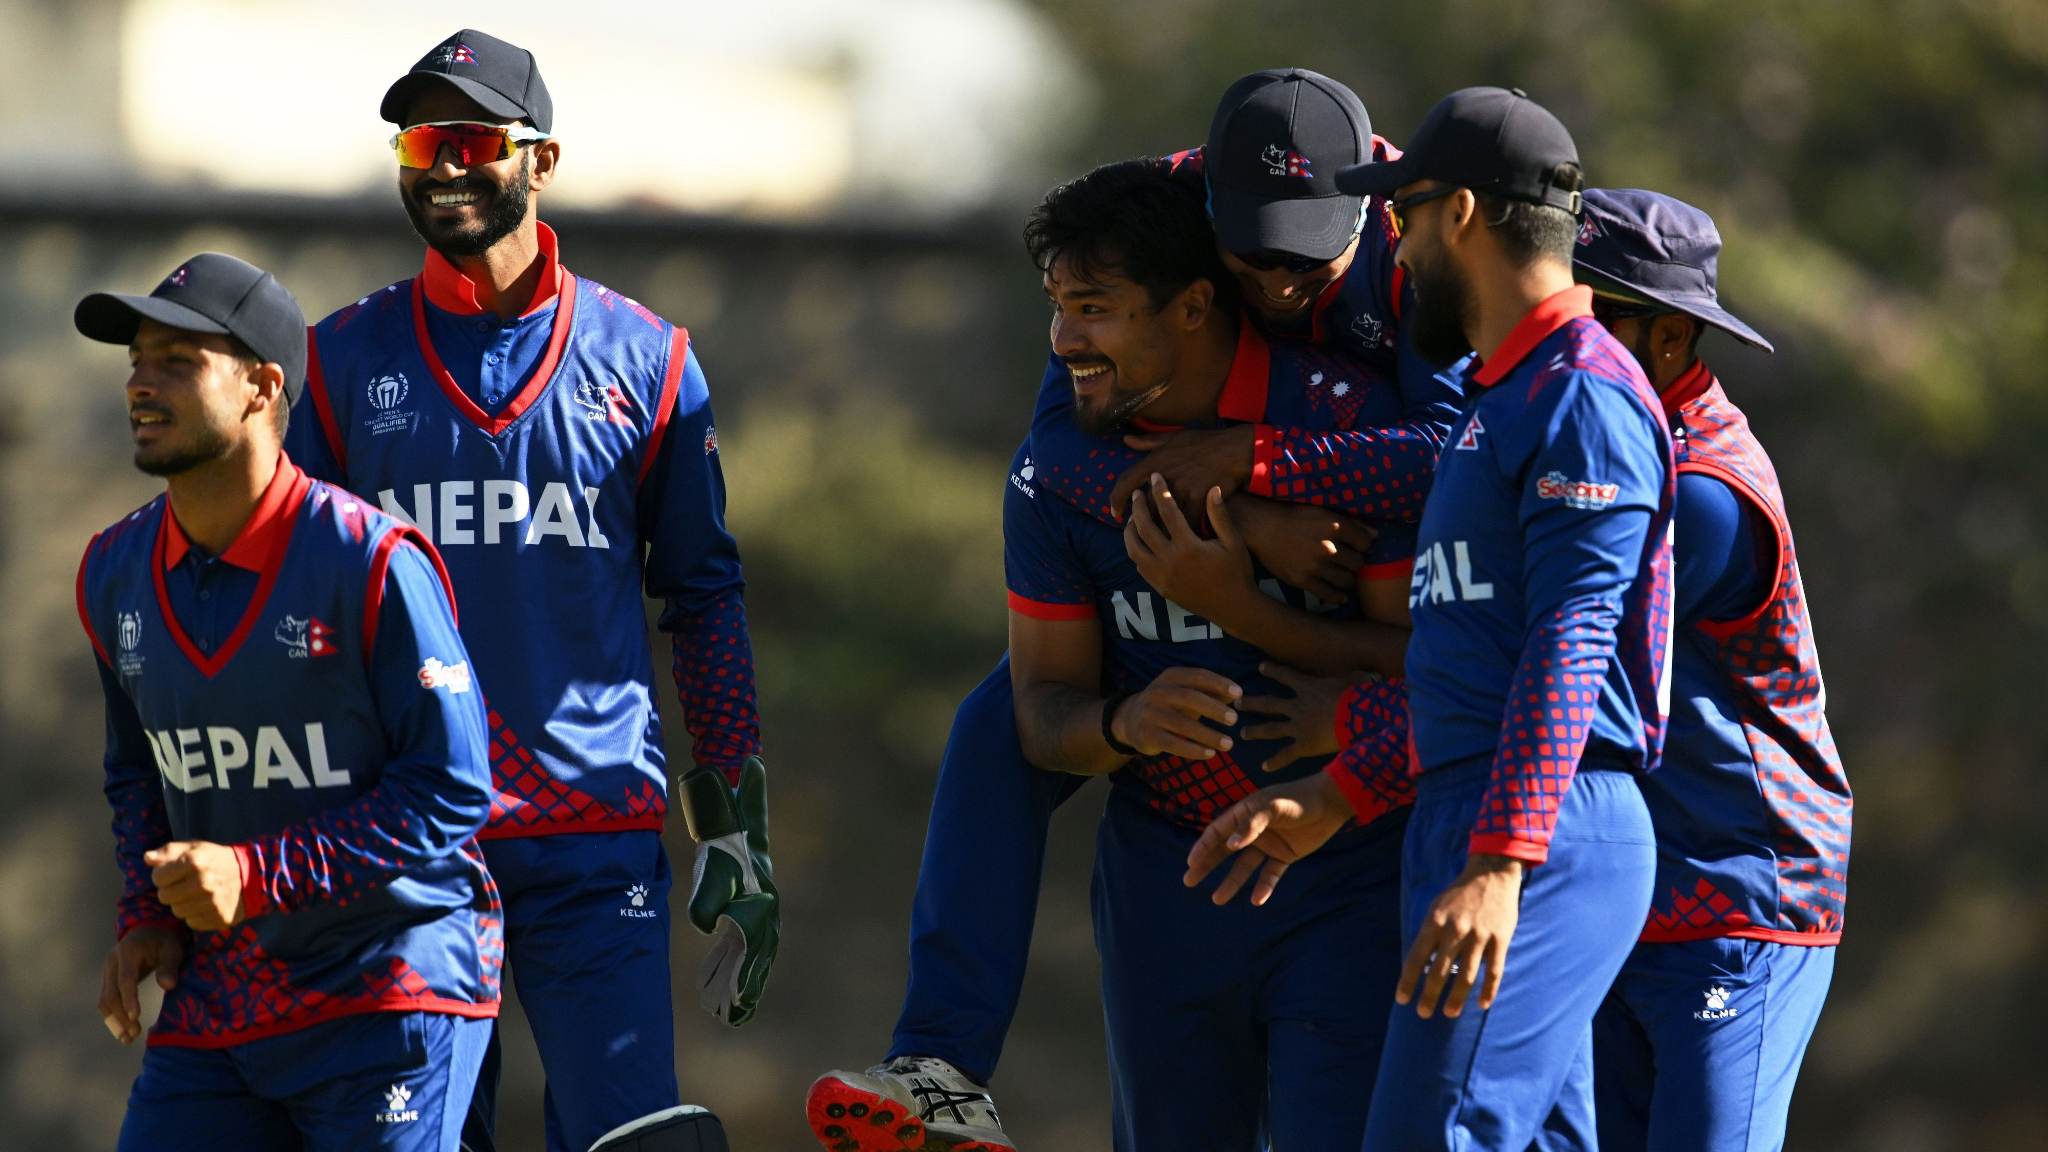 Nepal cricket team to prepare for Asia Cup in Sri Lanka